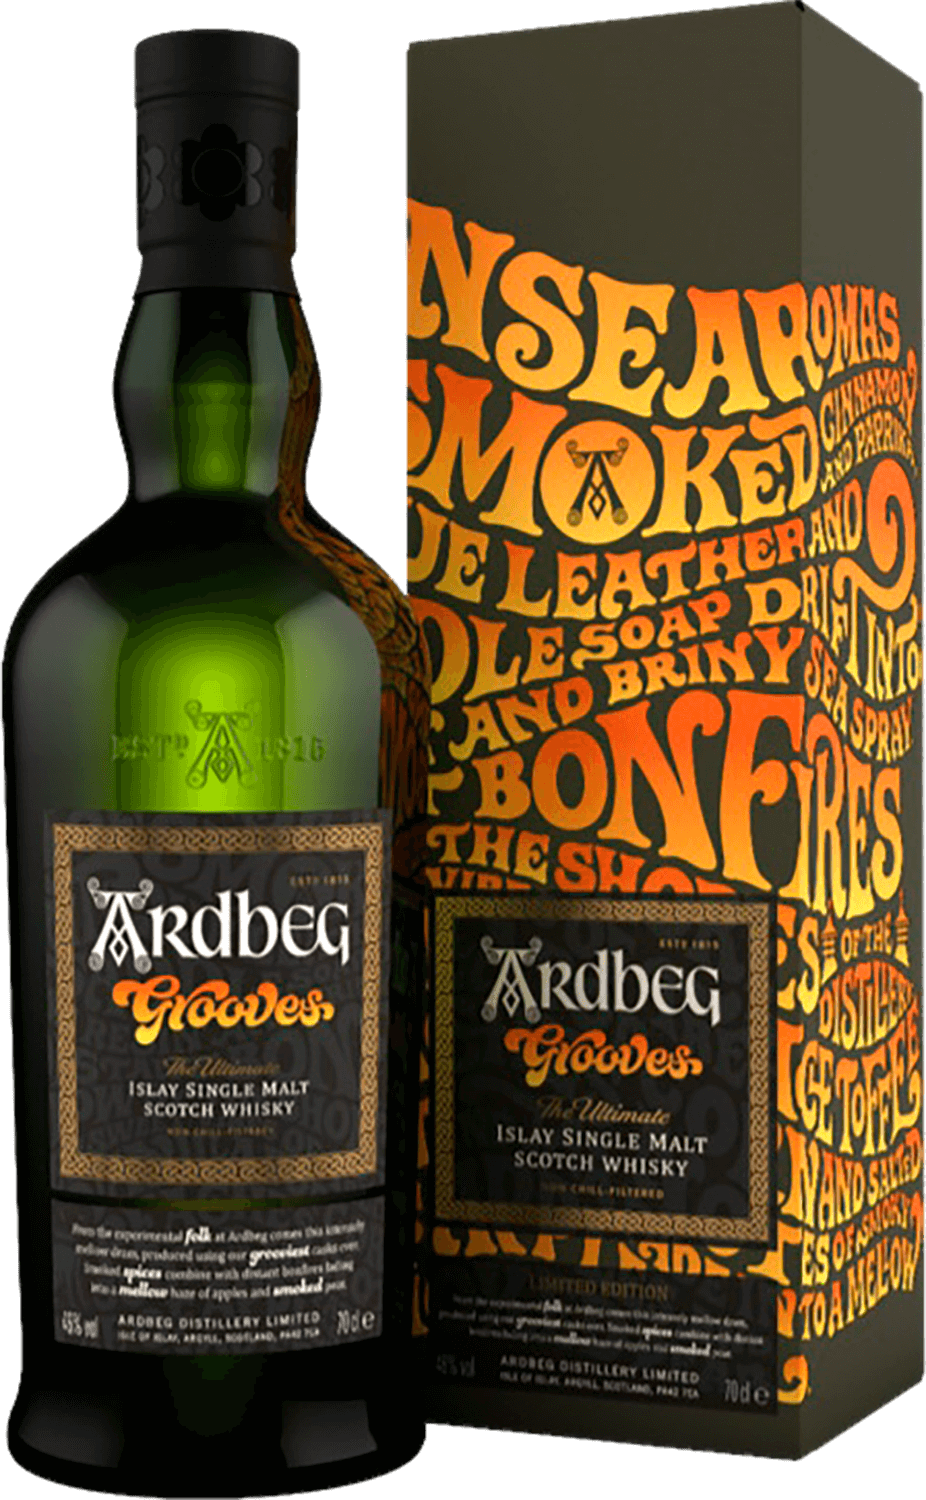 Ardbeg Grooves Islay Single Malt Scotch Whisky (gift box) bowmore islay single malt scotch whisky 12 y o gift box